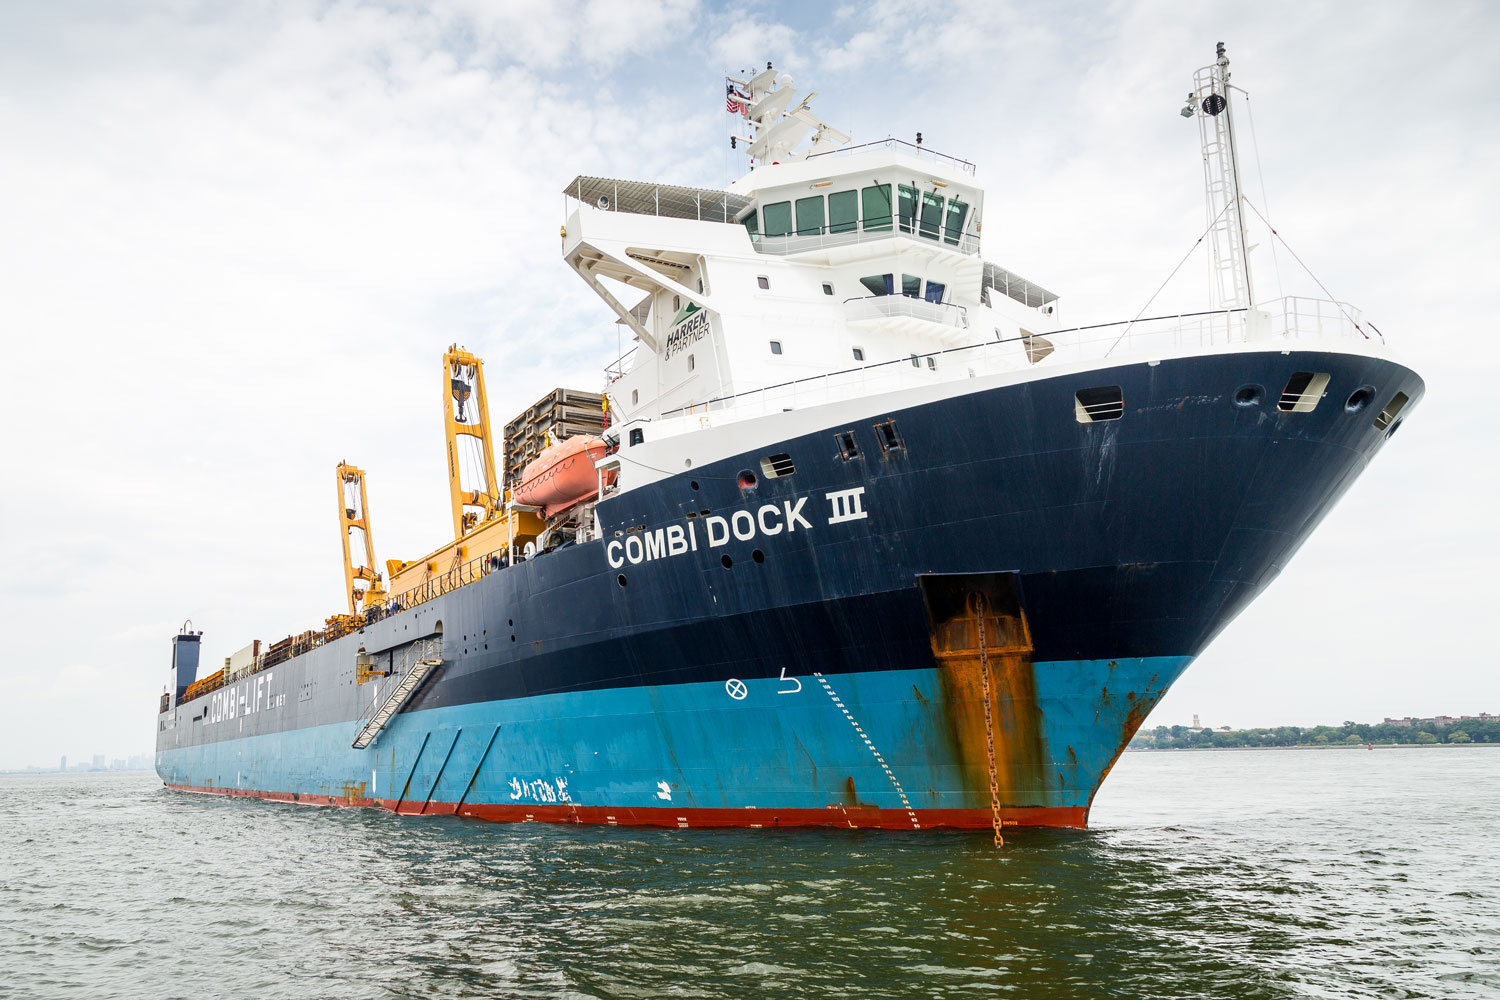 Combi Dock 3 Schiff holt Viermastbark Peking nach Hause